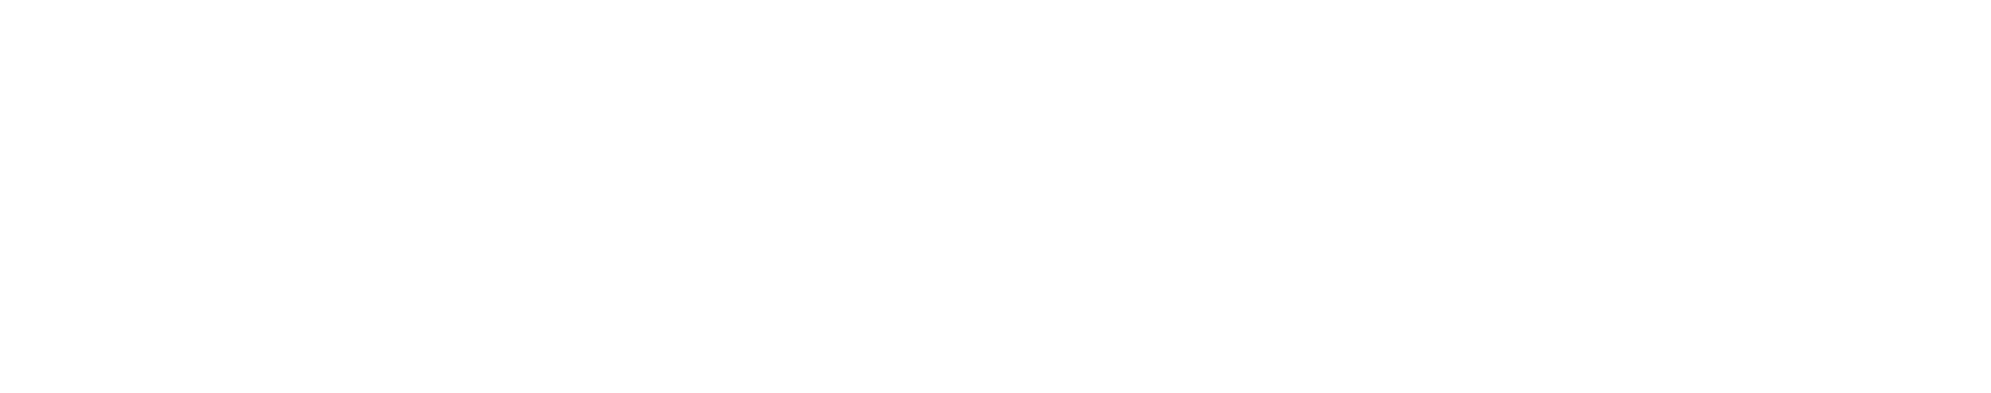 cropped-eludo-pro-logo-white.png